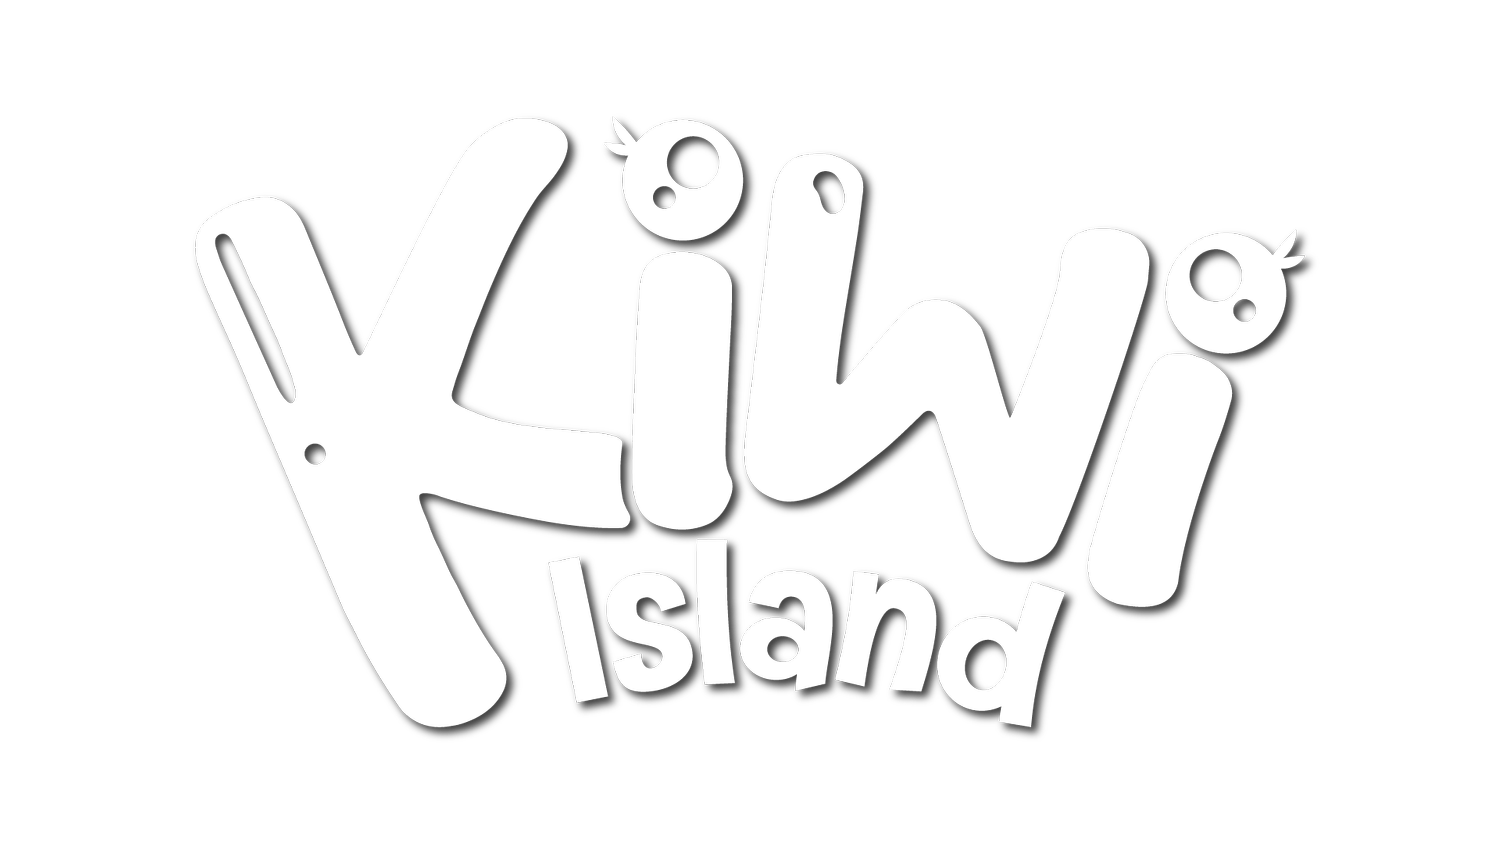 Kiwi Island